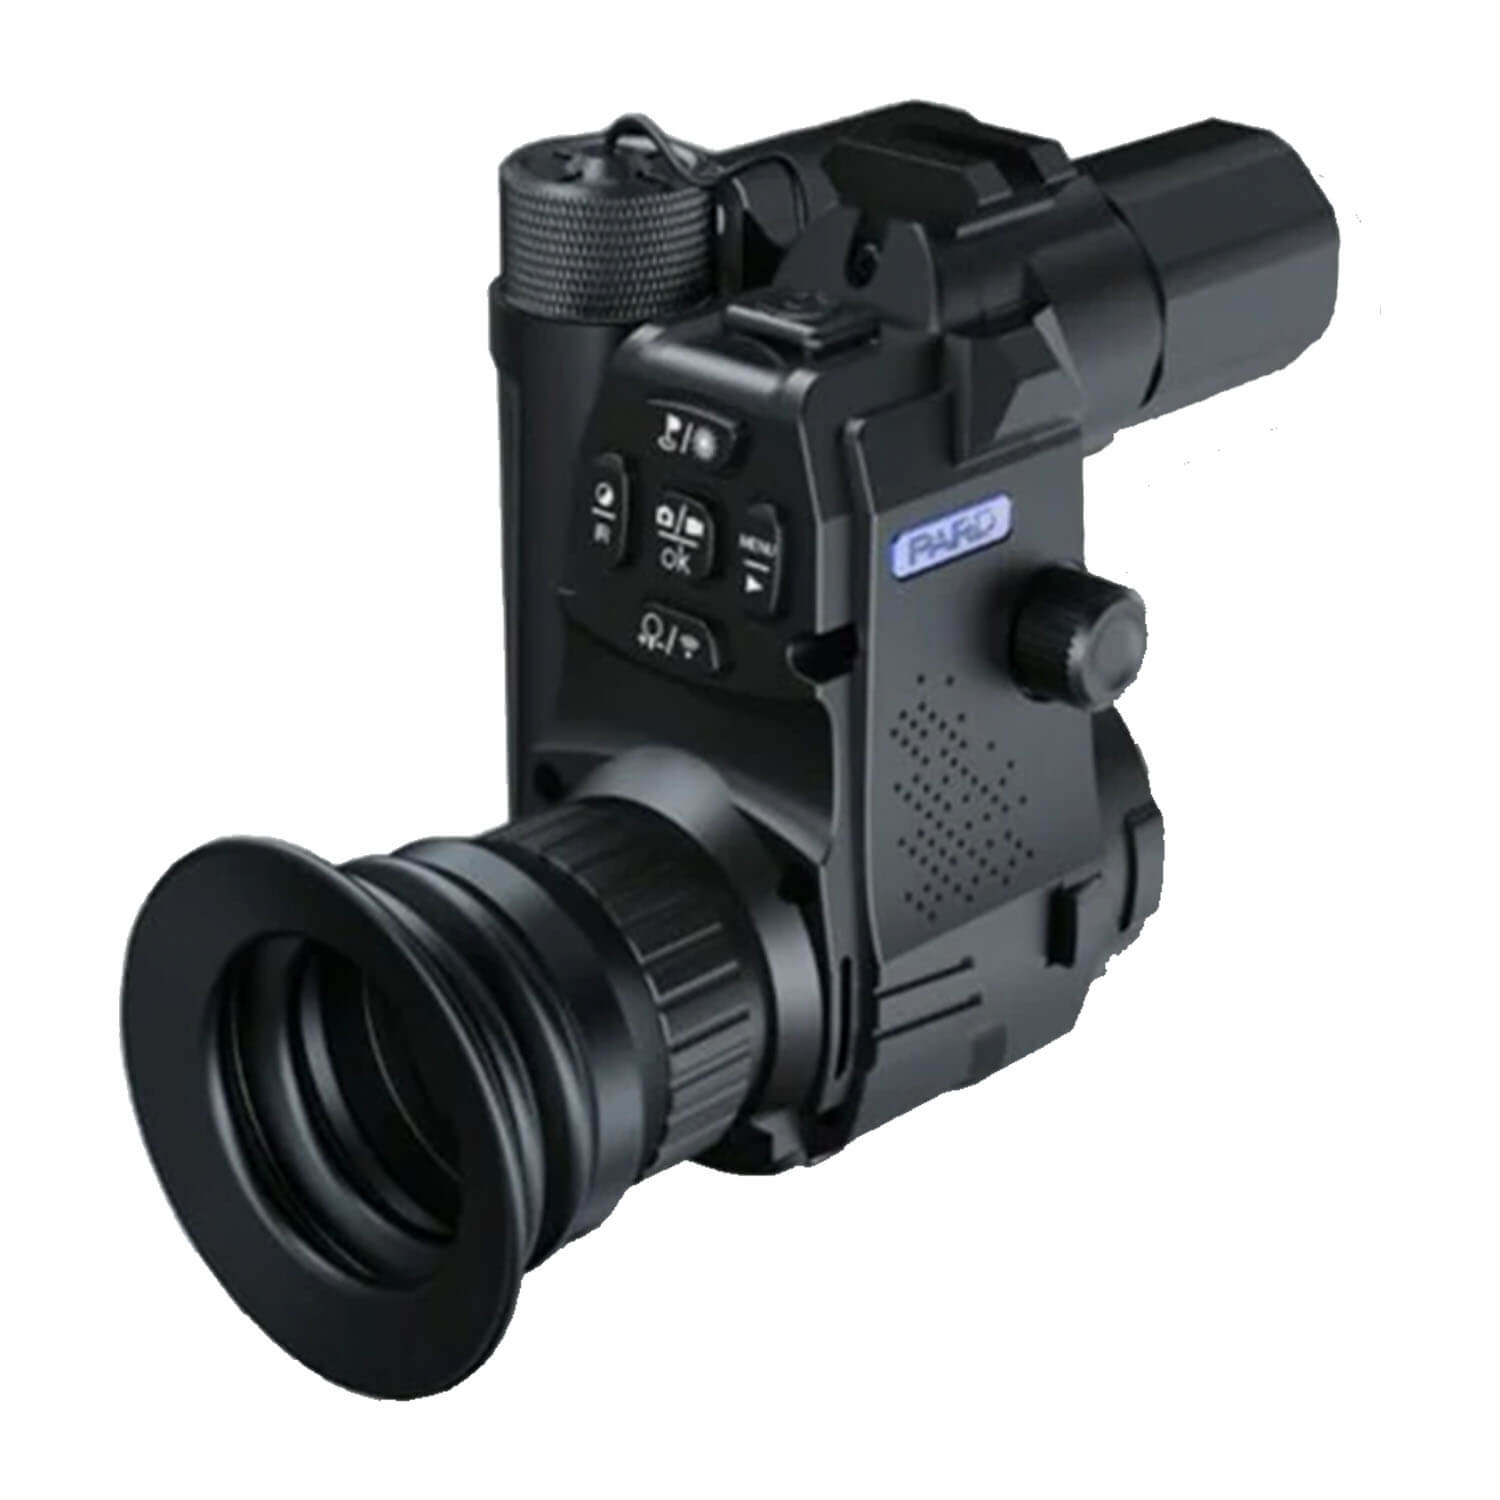 Pard night vision strap on 007SP LRF 940mn - Optics